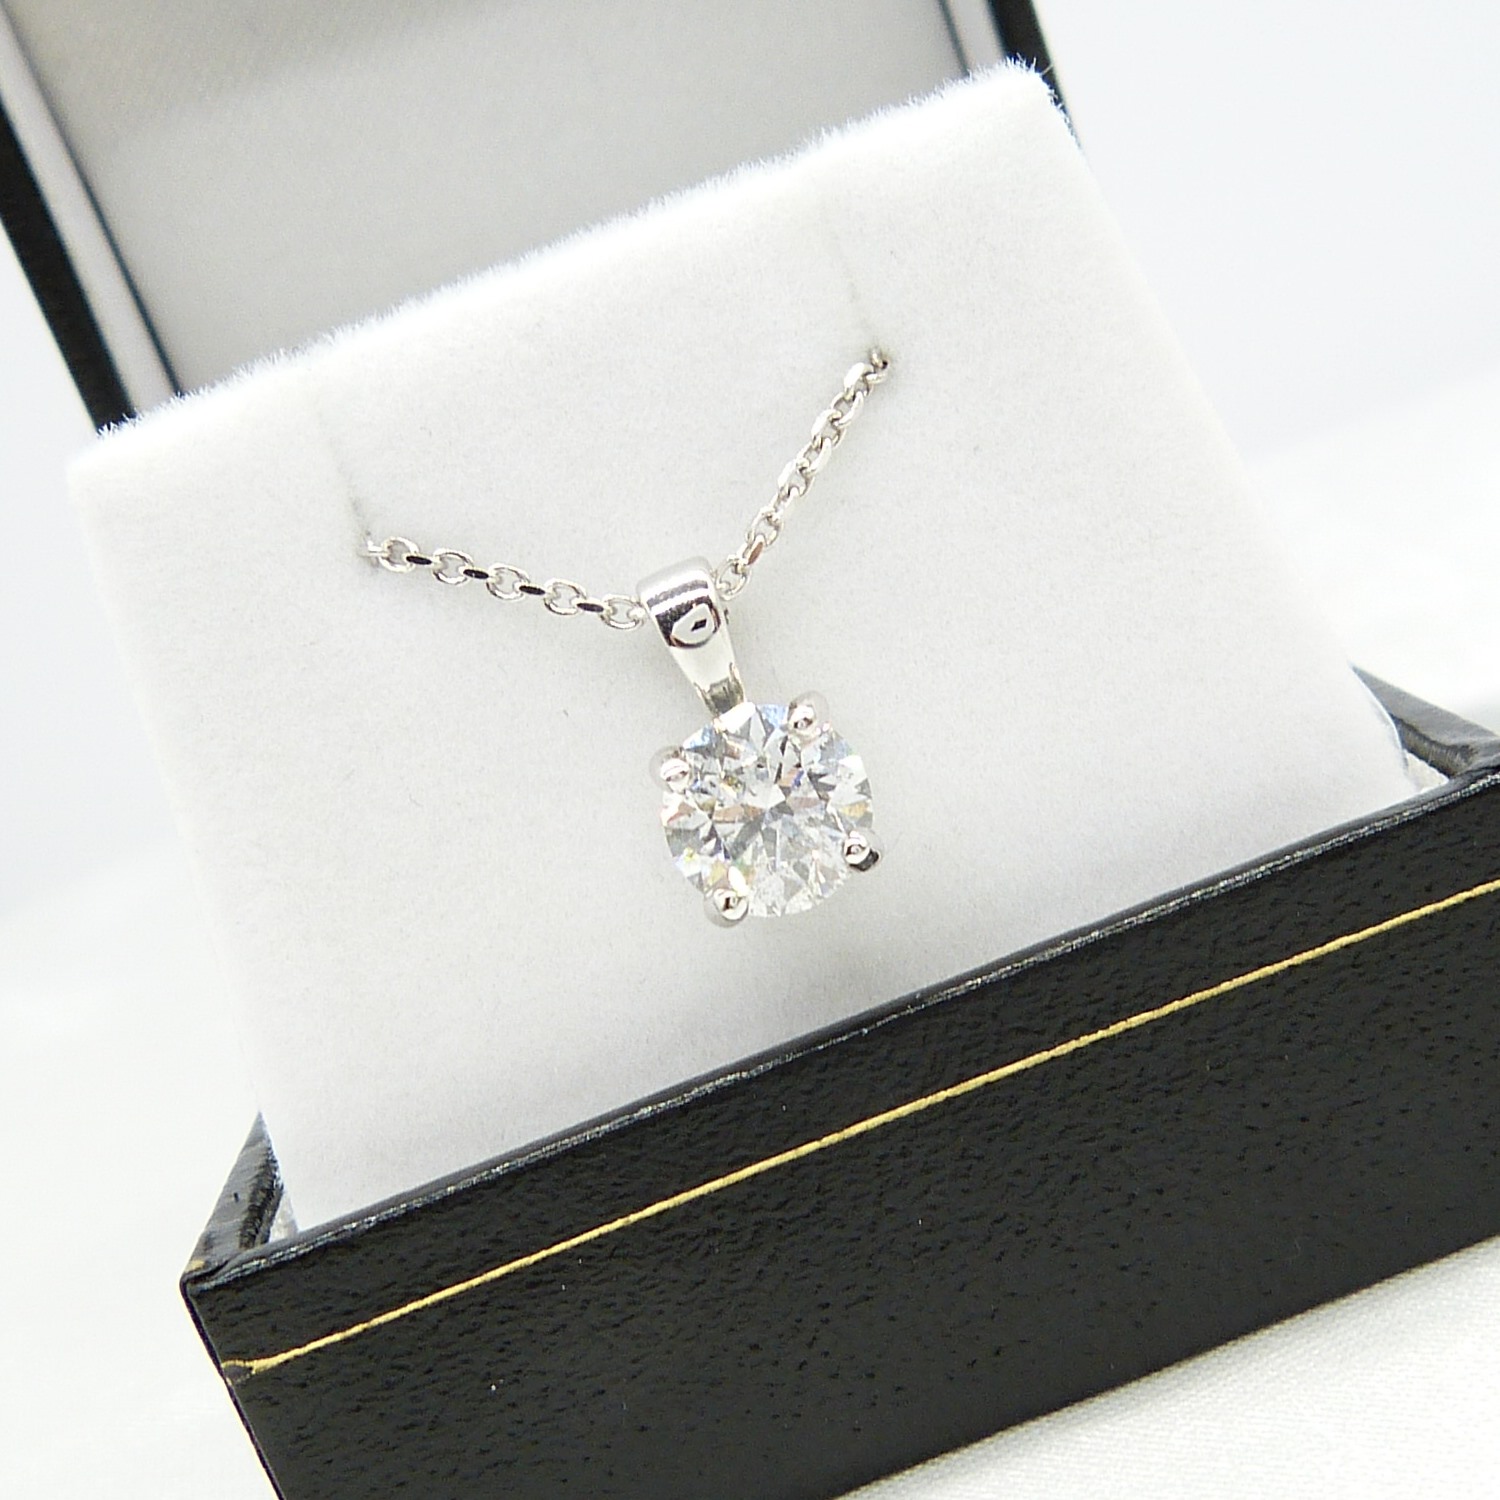 Certificated 1.24 carat, E colour round brilliant-cut diamond solitaire necklace, 18ct white gold - Image 8 of 9